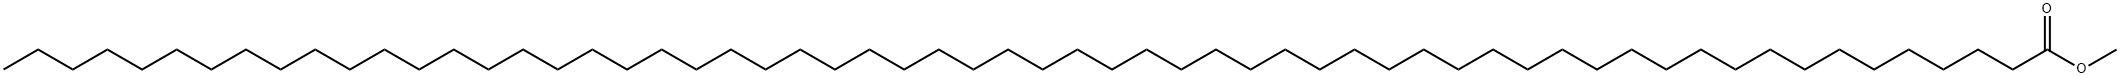 Hexacontanoic acid methyl ester|